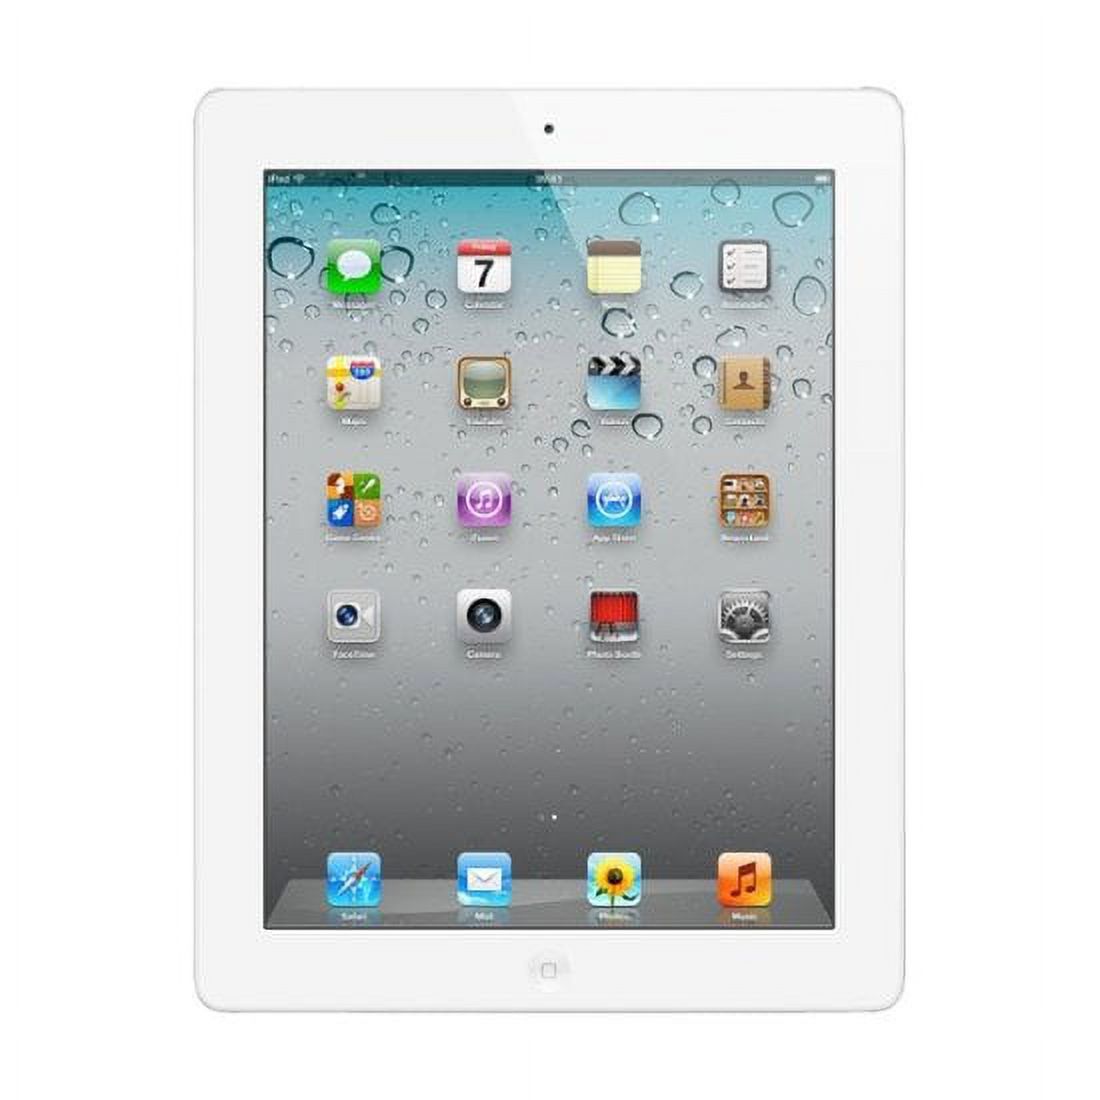 Restored Apple-iPad 2 16GB 9.7" Wi-Fi White (Refurbished) - image 1 of 2